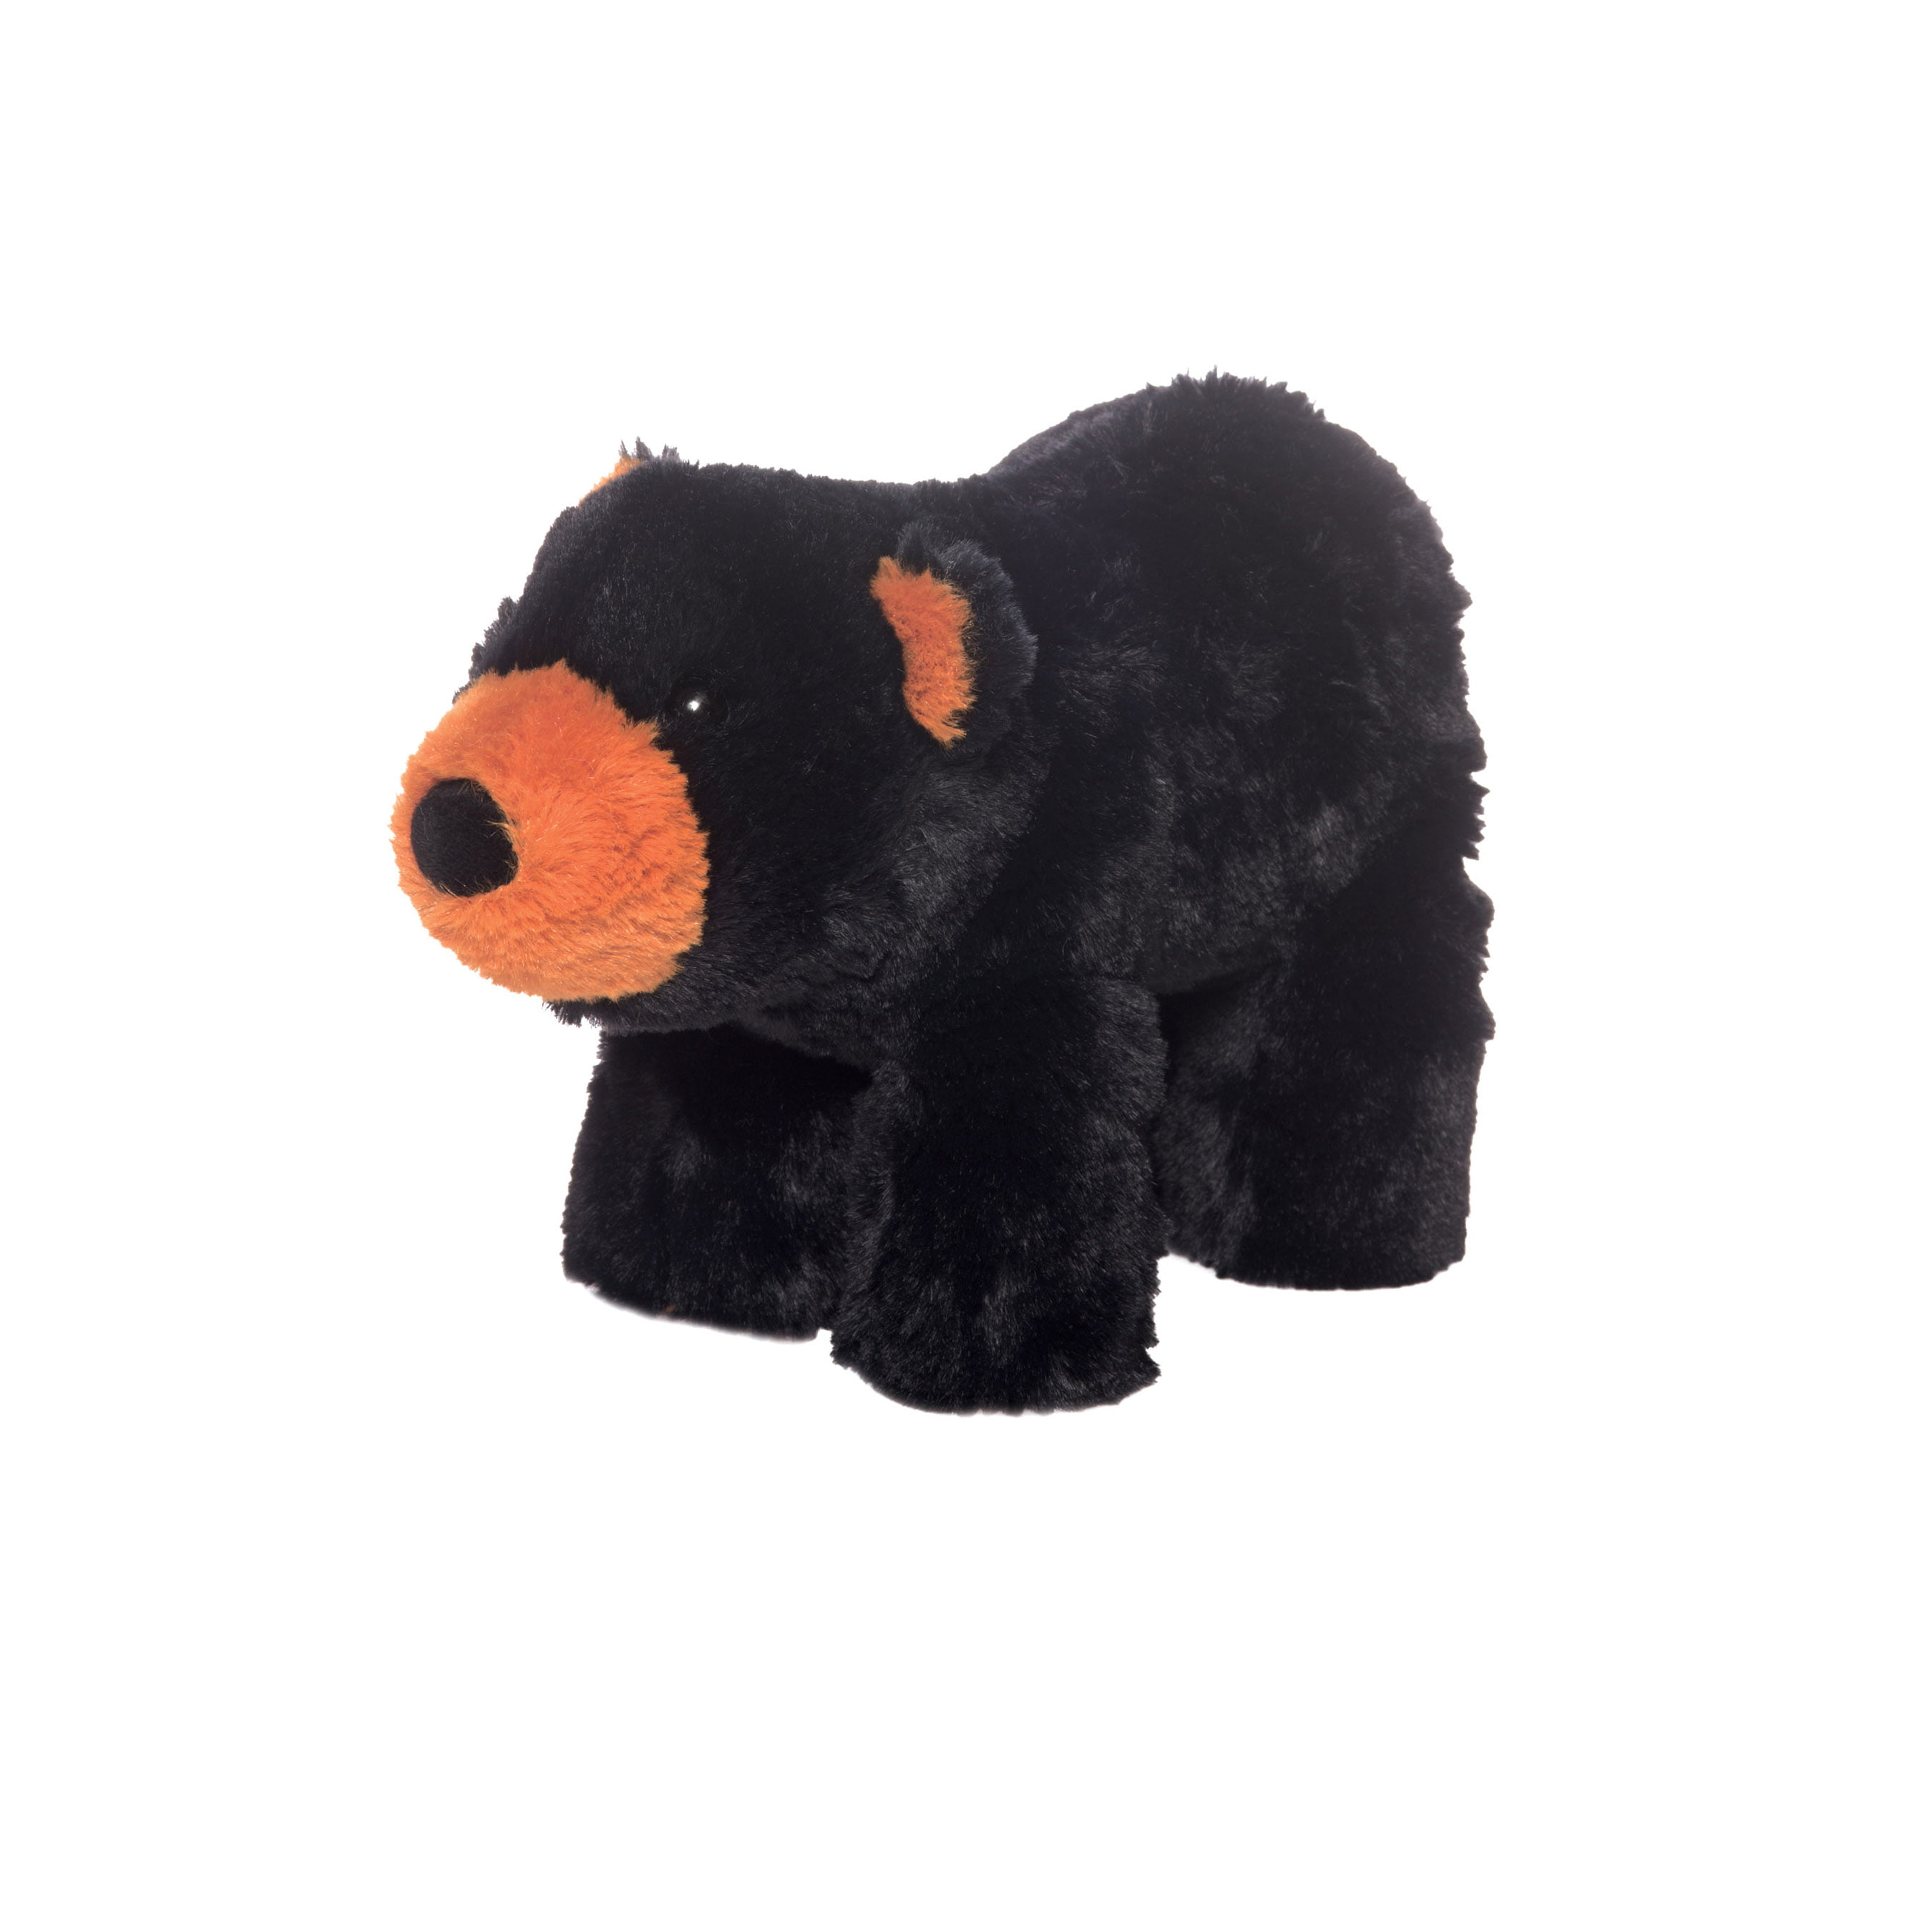 Plush 13" Luxe Sable Bear Soft Hug Toy